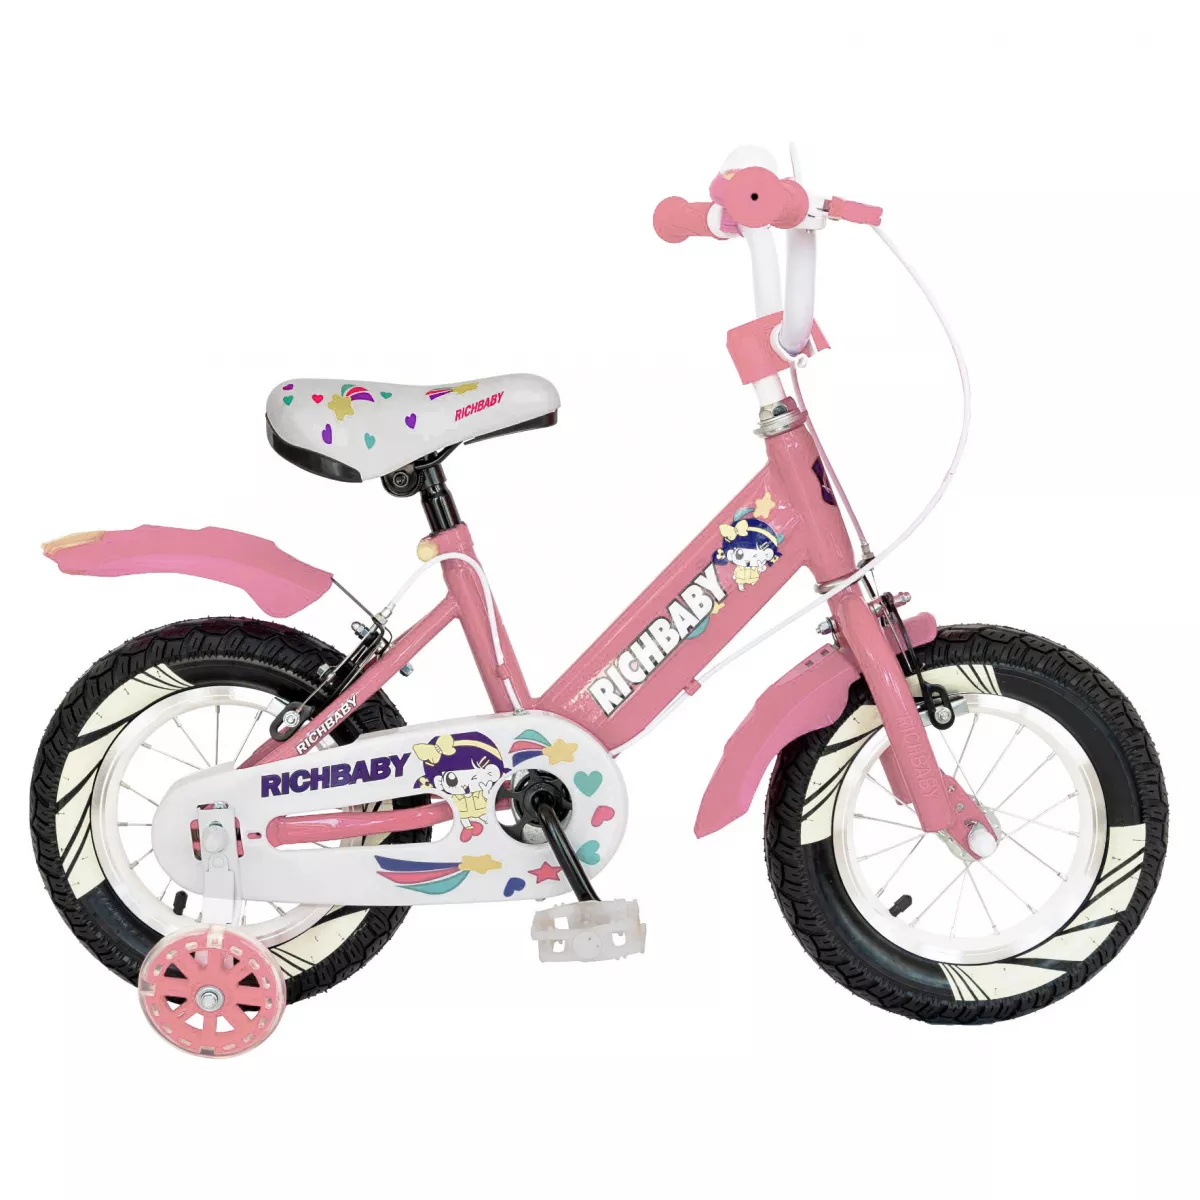 Bicicleta fete Rich Baby R1808A, roata 18", C-Brake otel, roti ajutatoare cu LED, 5-7 ani, roz/alb